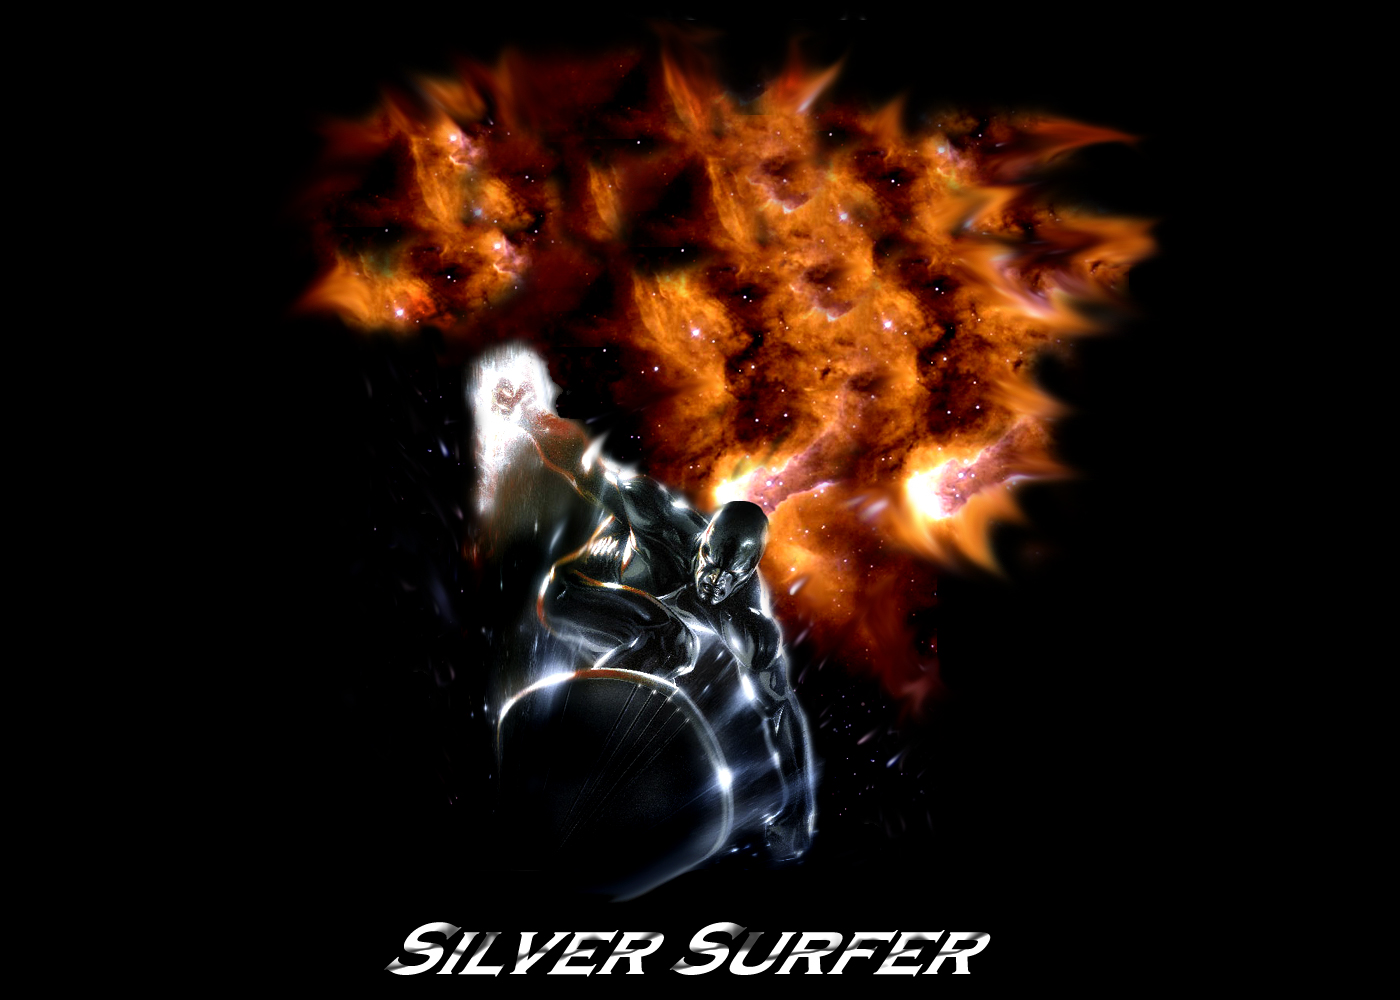 Silver surfer 3